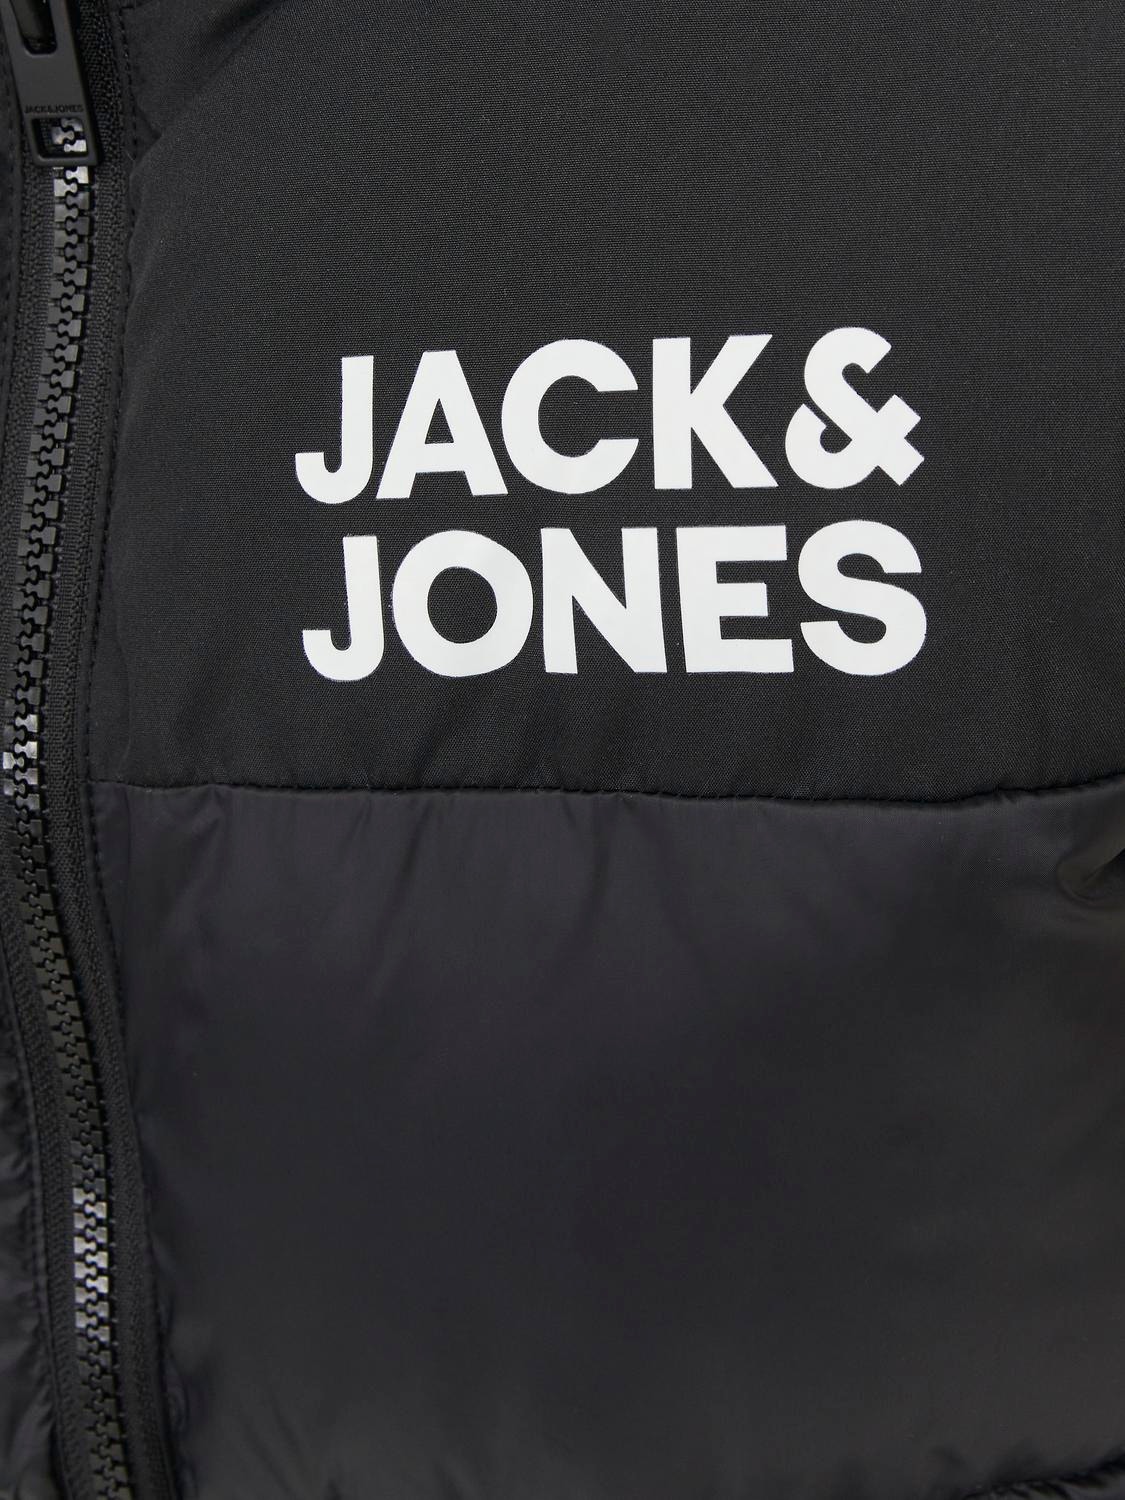 Jack & Jones Weste Für jungs -Black - 12236914